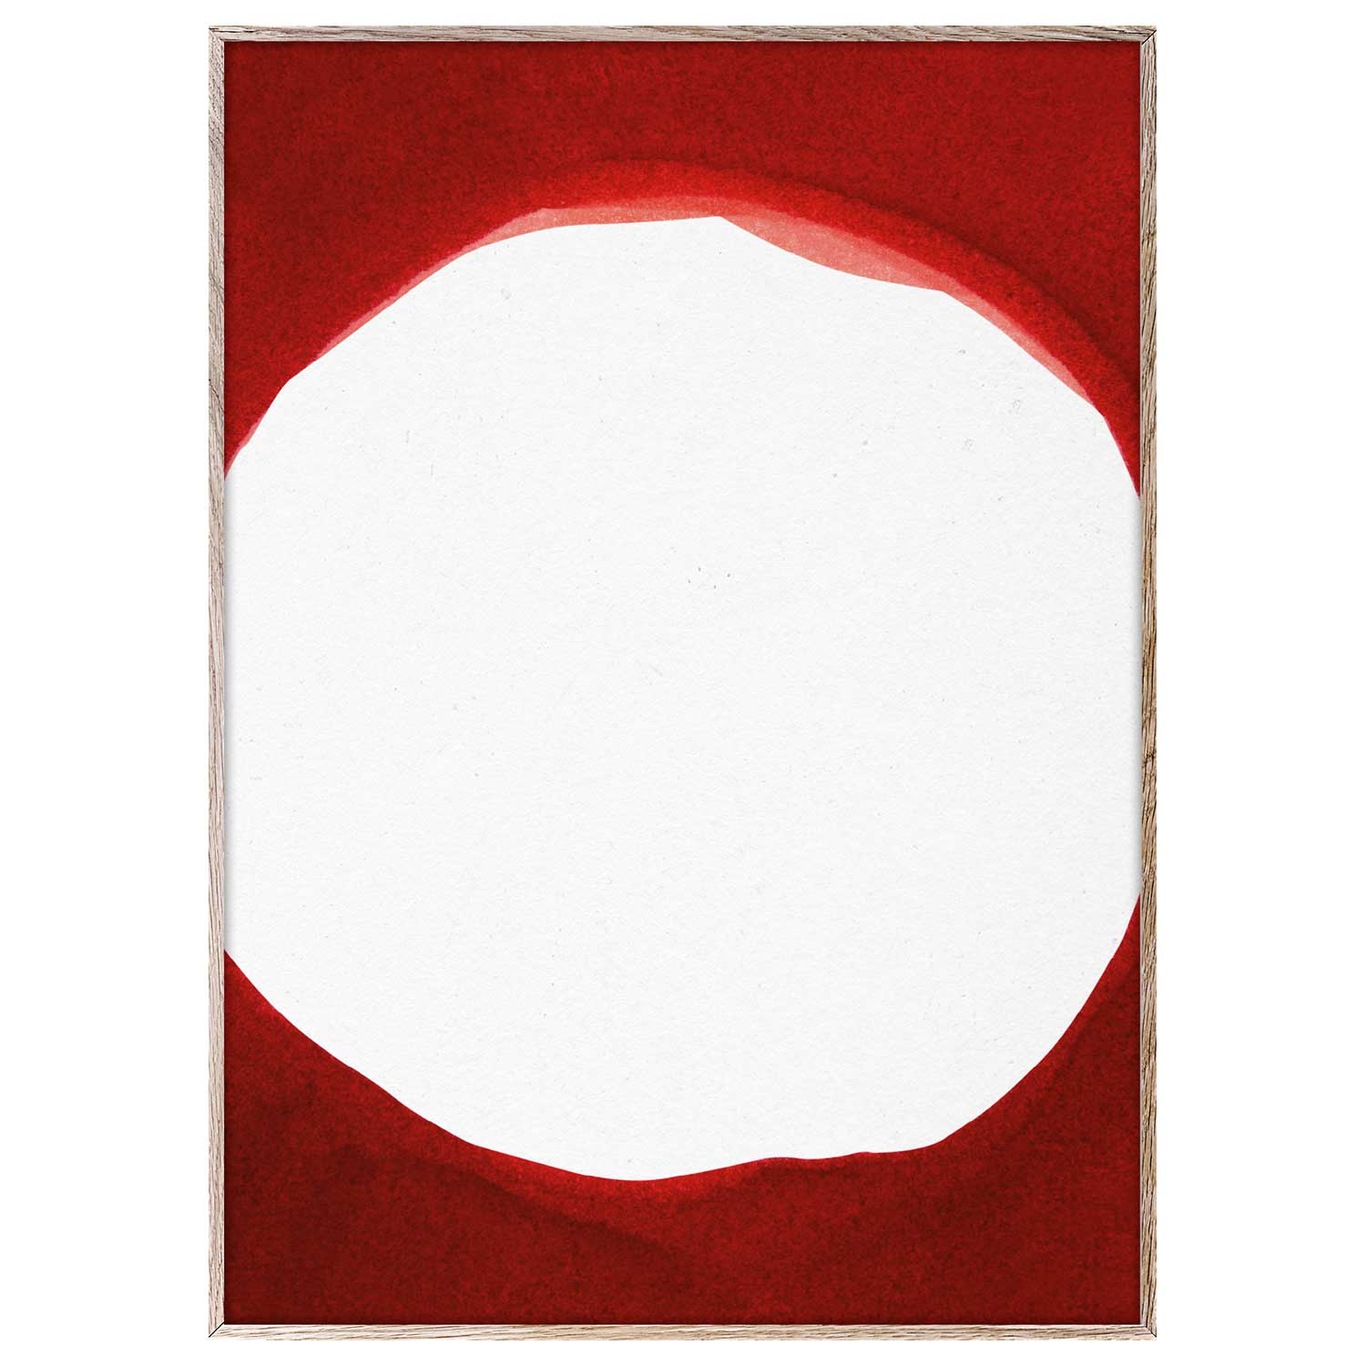 Ensō Red III Poster, 30 x 40 cm